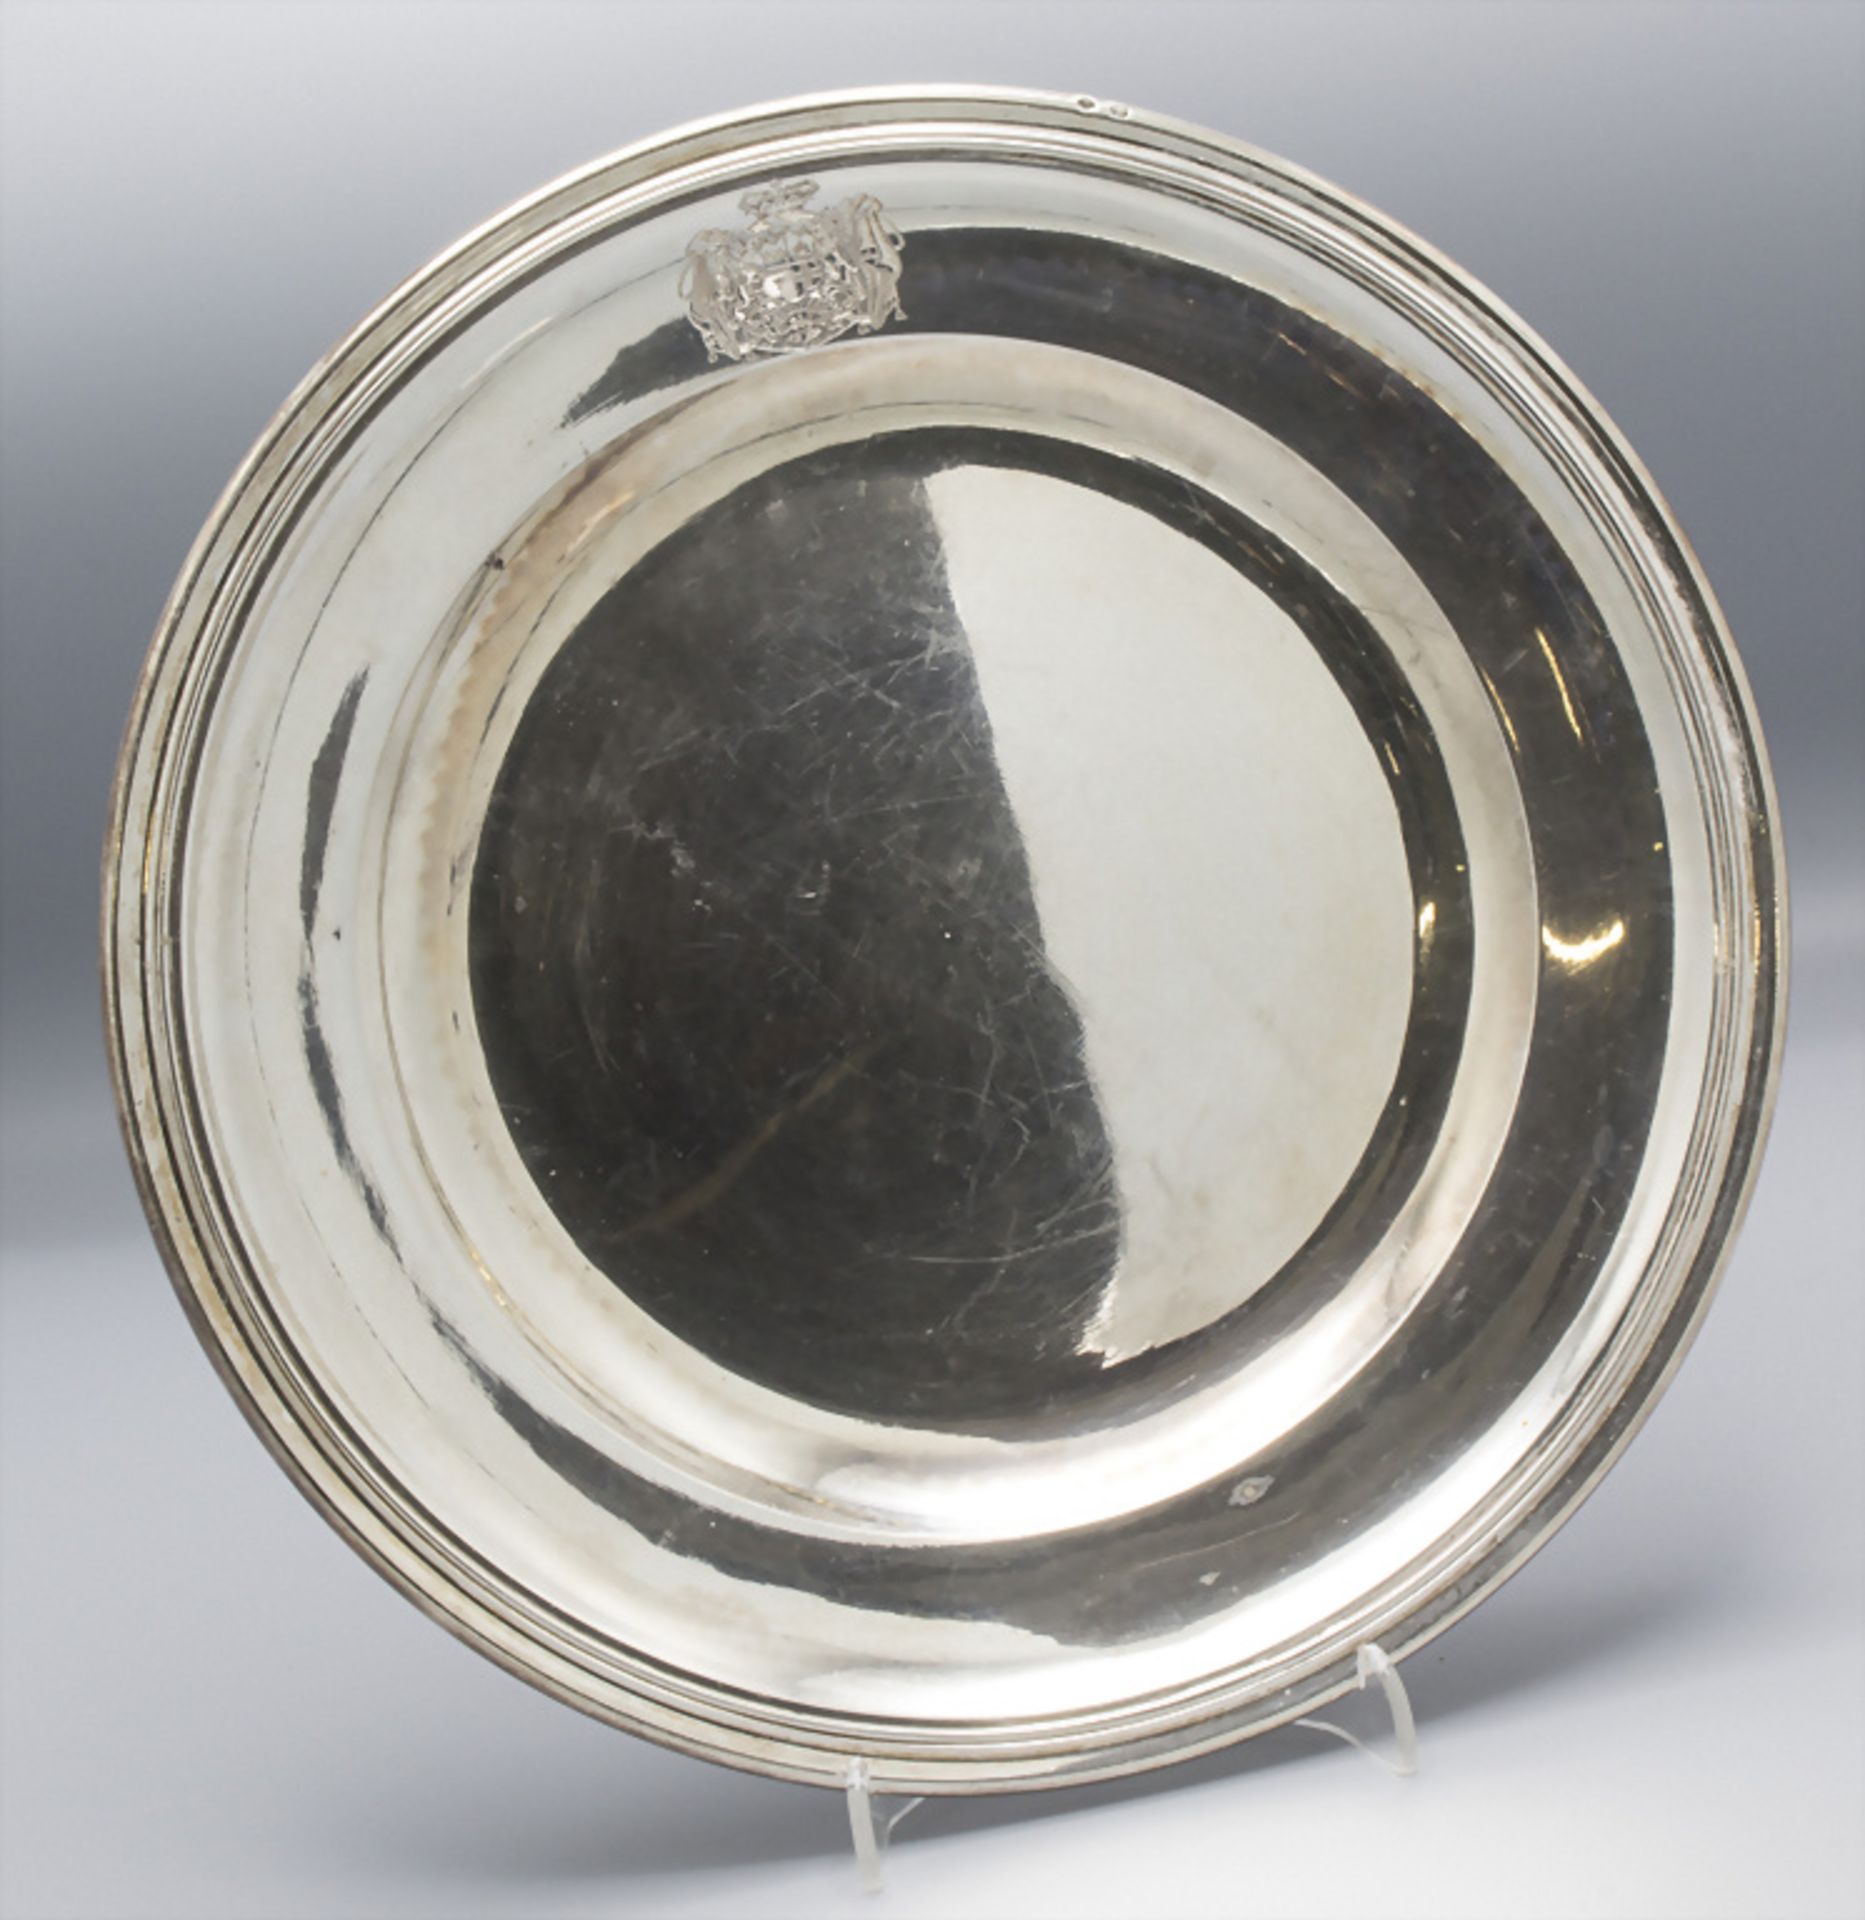 12 Silberteller / 12 assiettes en argent massif / A set of 12 silver plates, Odiot, Paris, um 1870 - Image 14 of 29